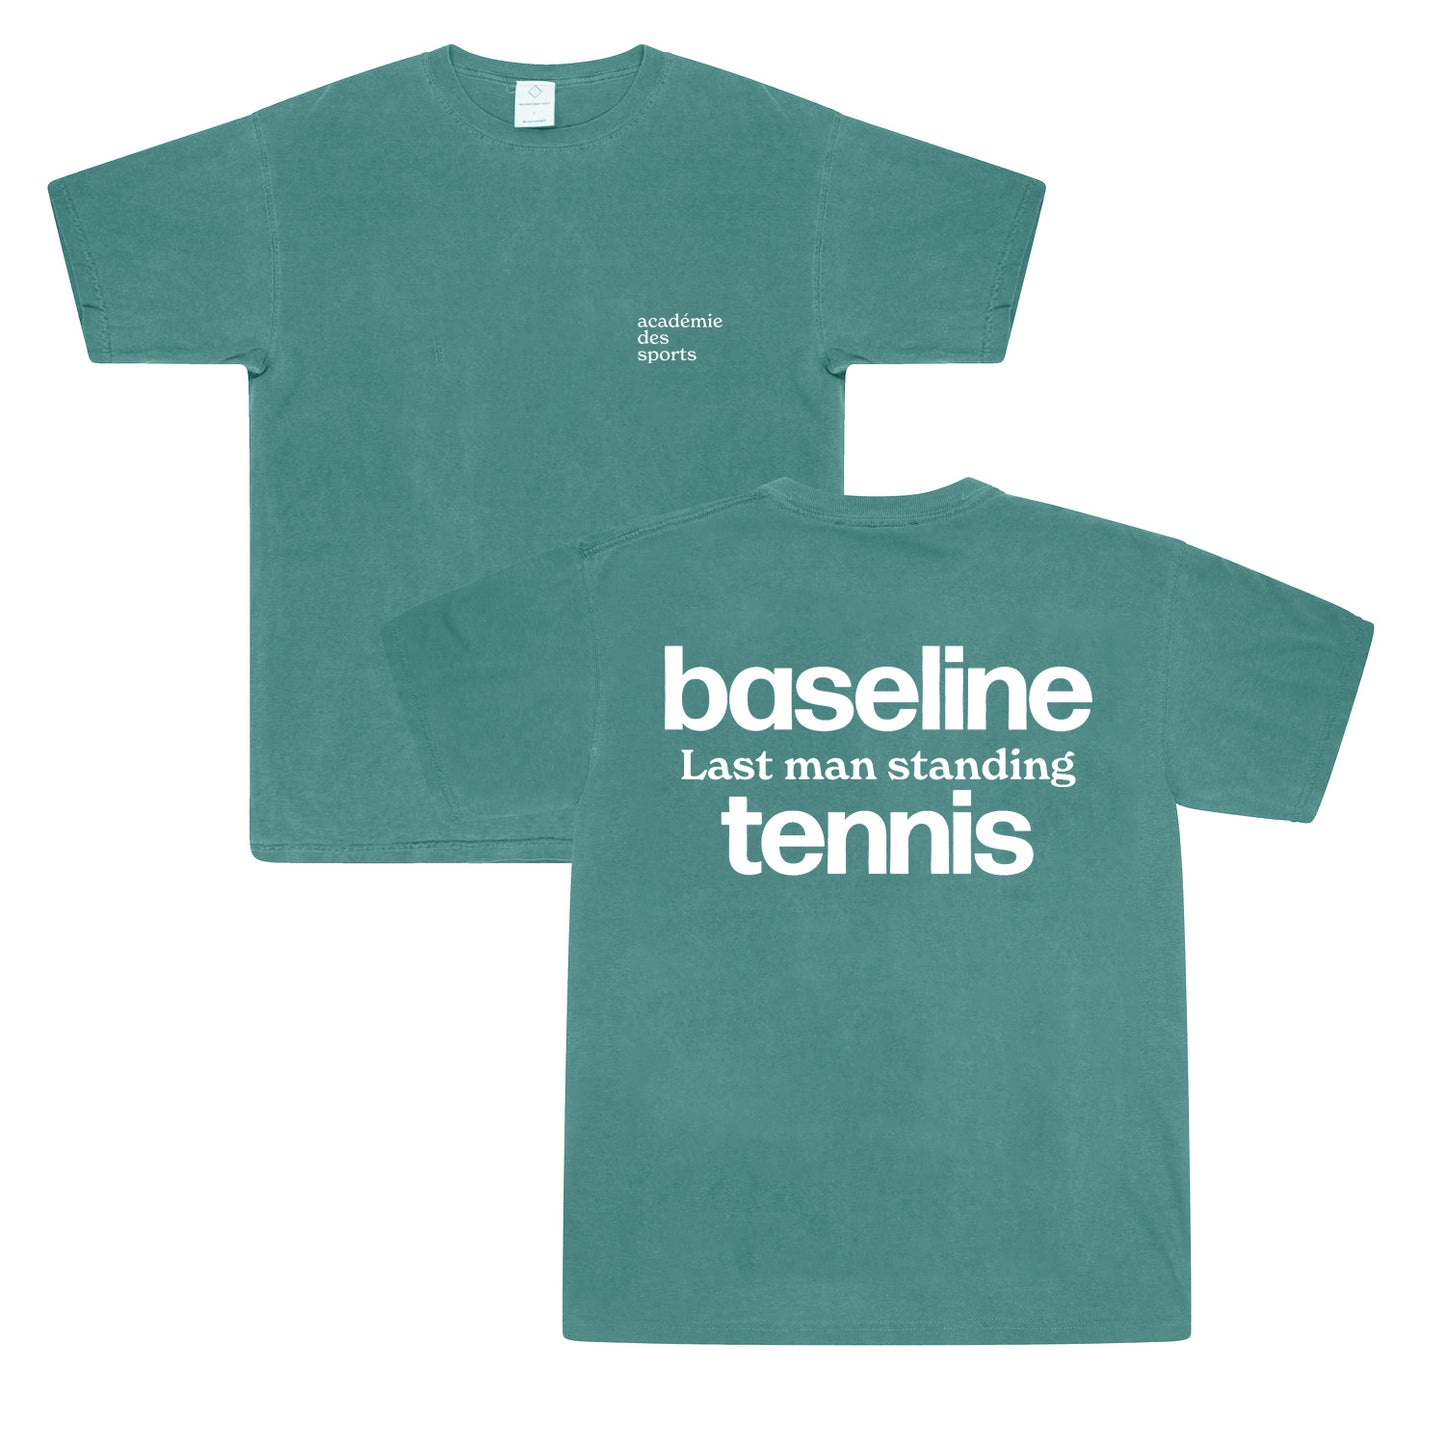 Vice 84 'Baseline' Tee - Vintage Washed Green